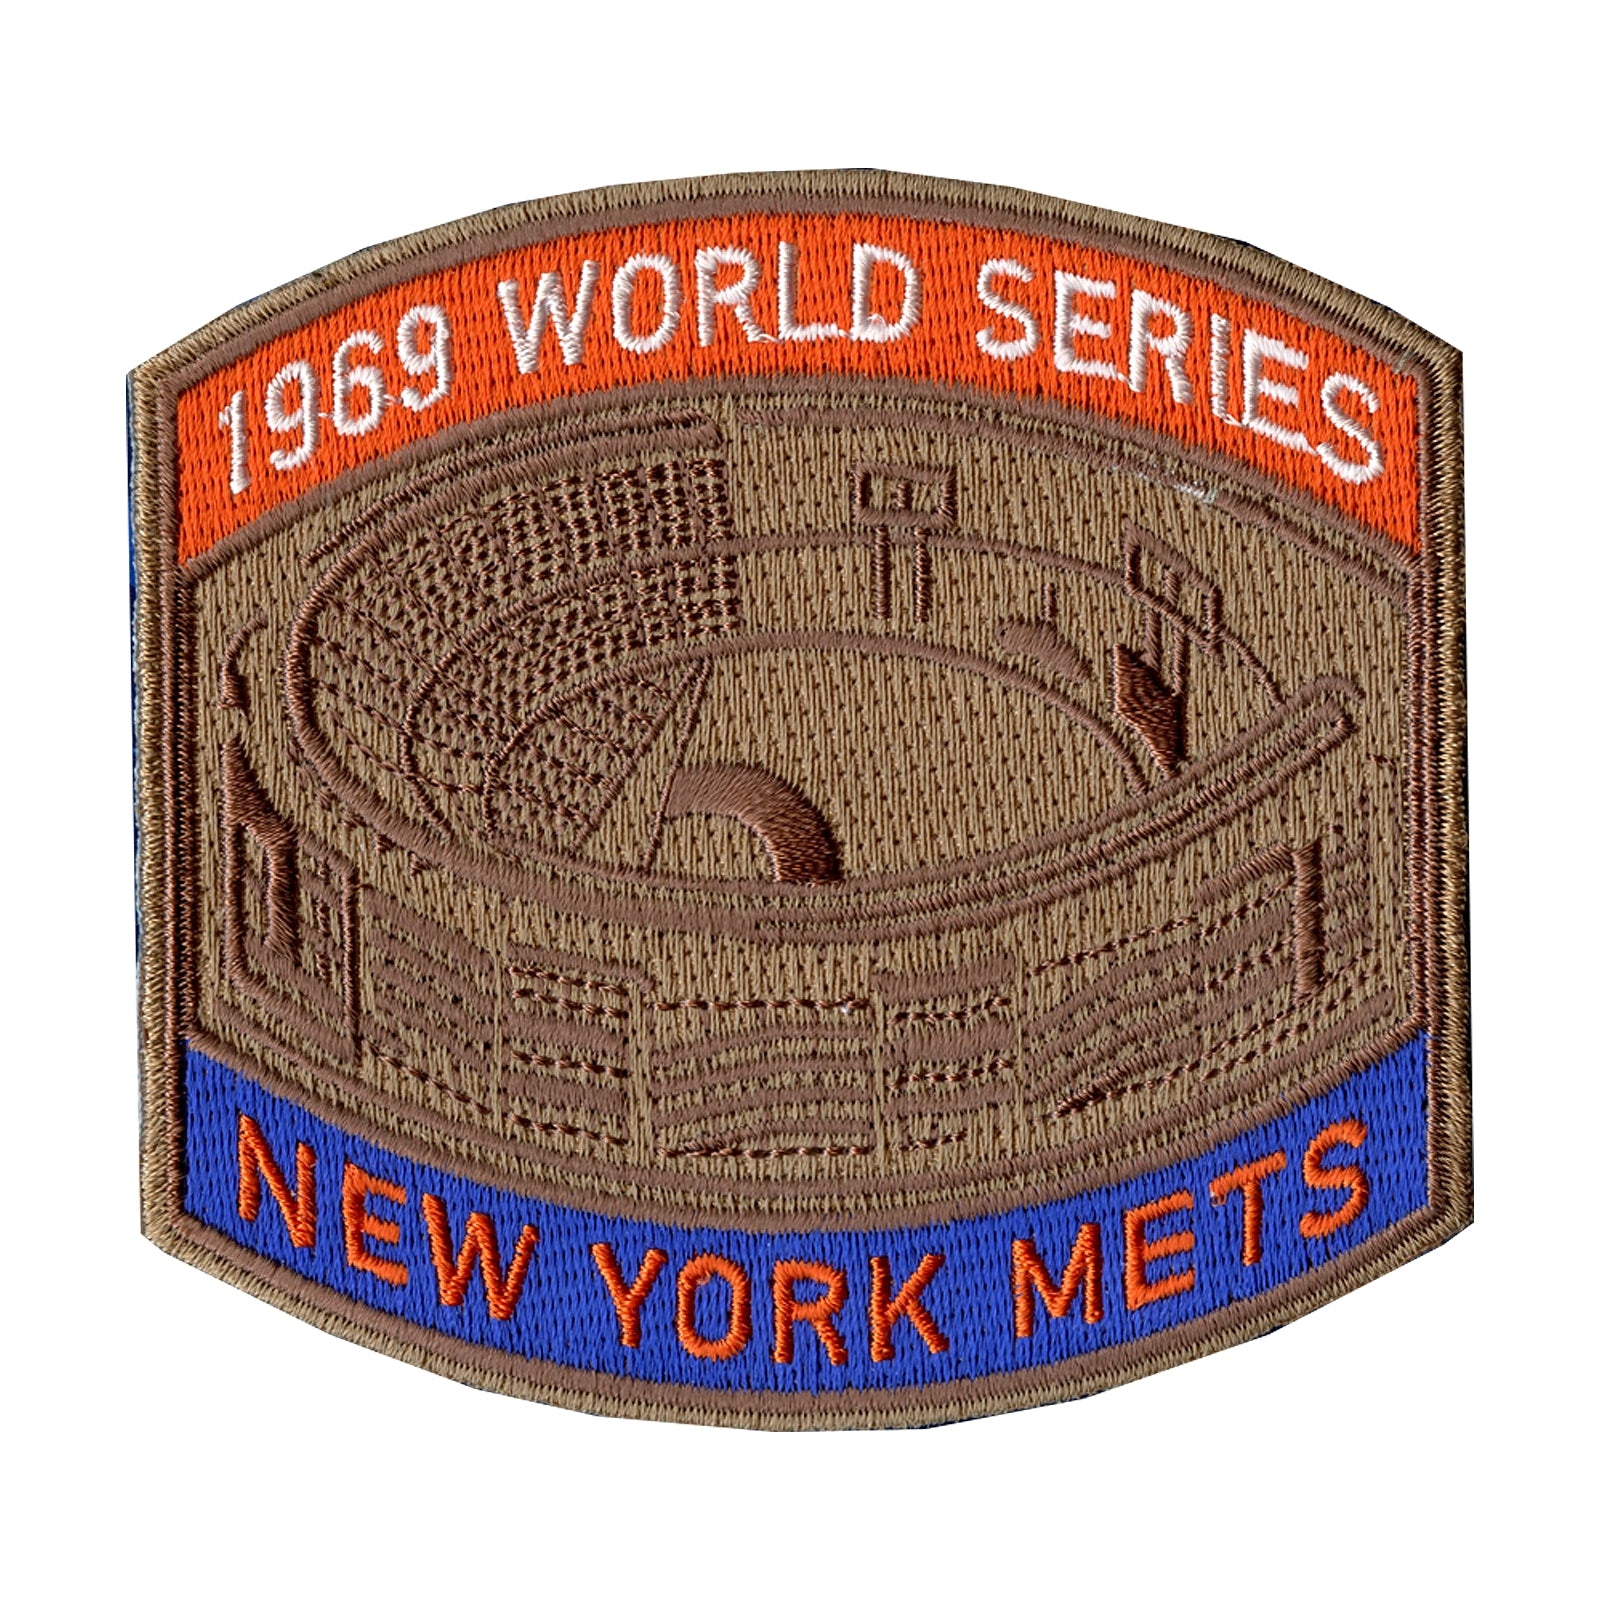 New York Mets 1969 World Series